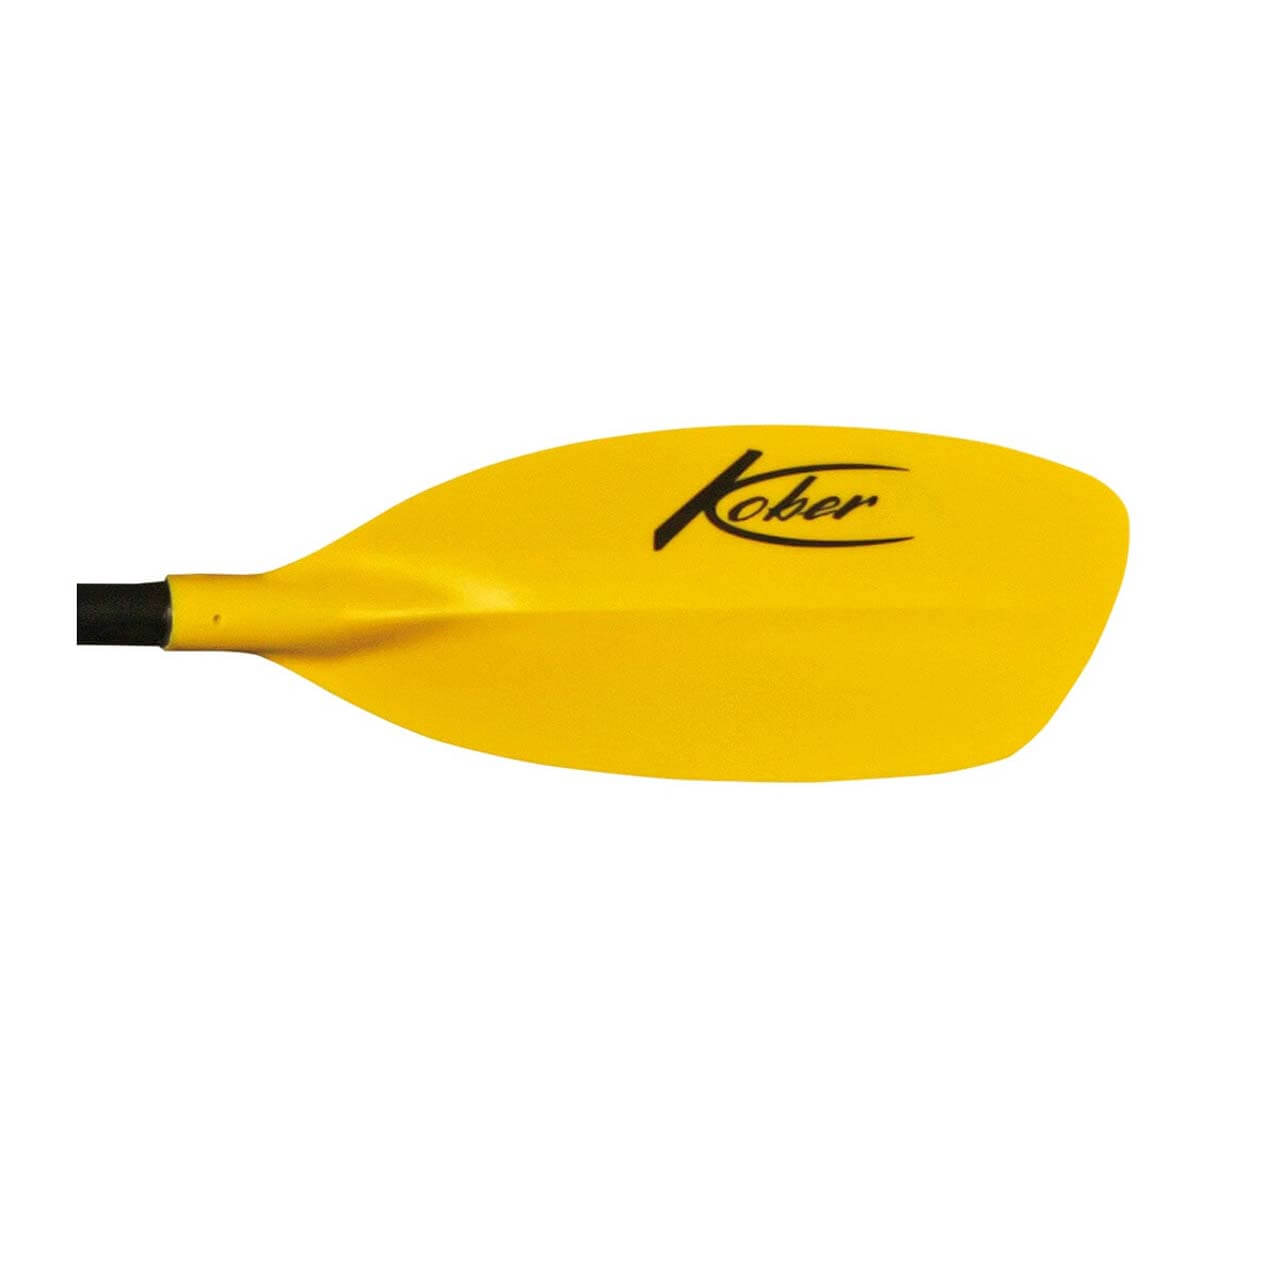 Kober Speedy Kinderpaddel GFK-Schaft - gelb, 180cm